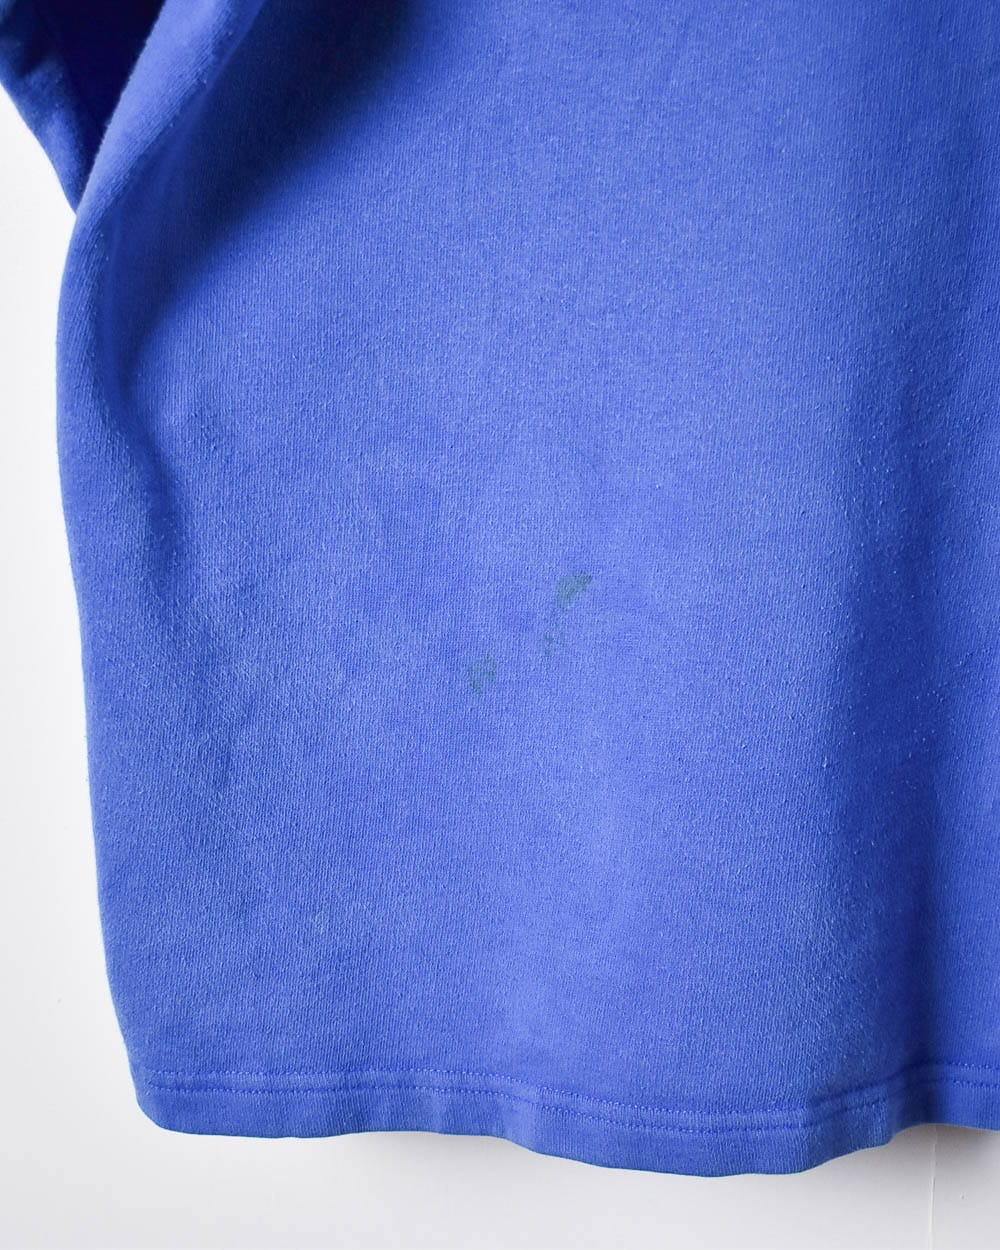 Blue Adidas Worn Sweatshirt - X-Small